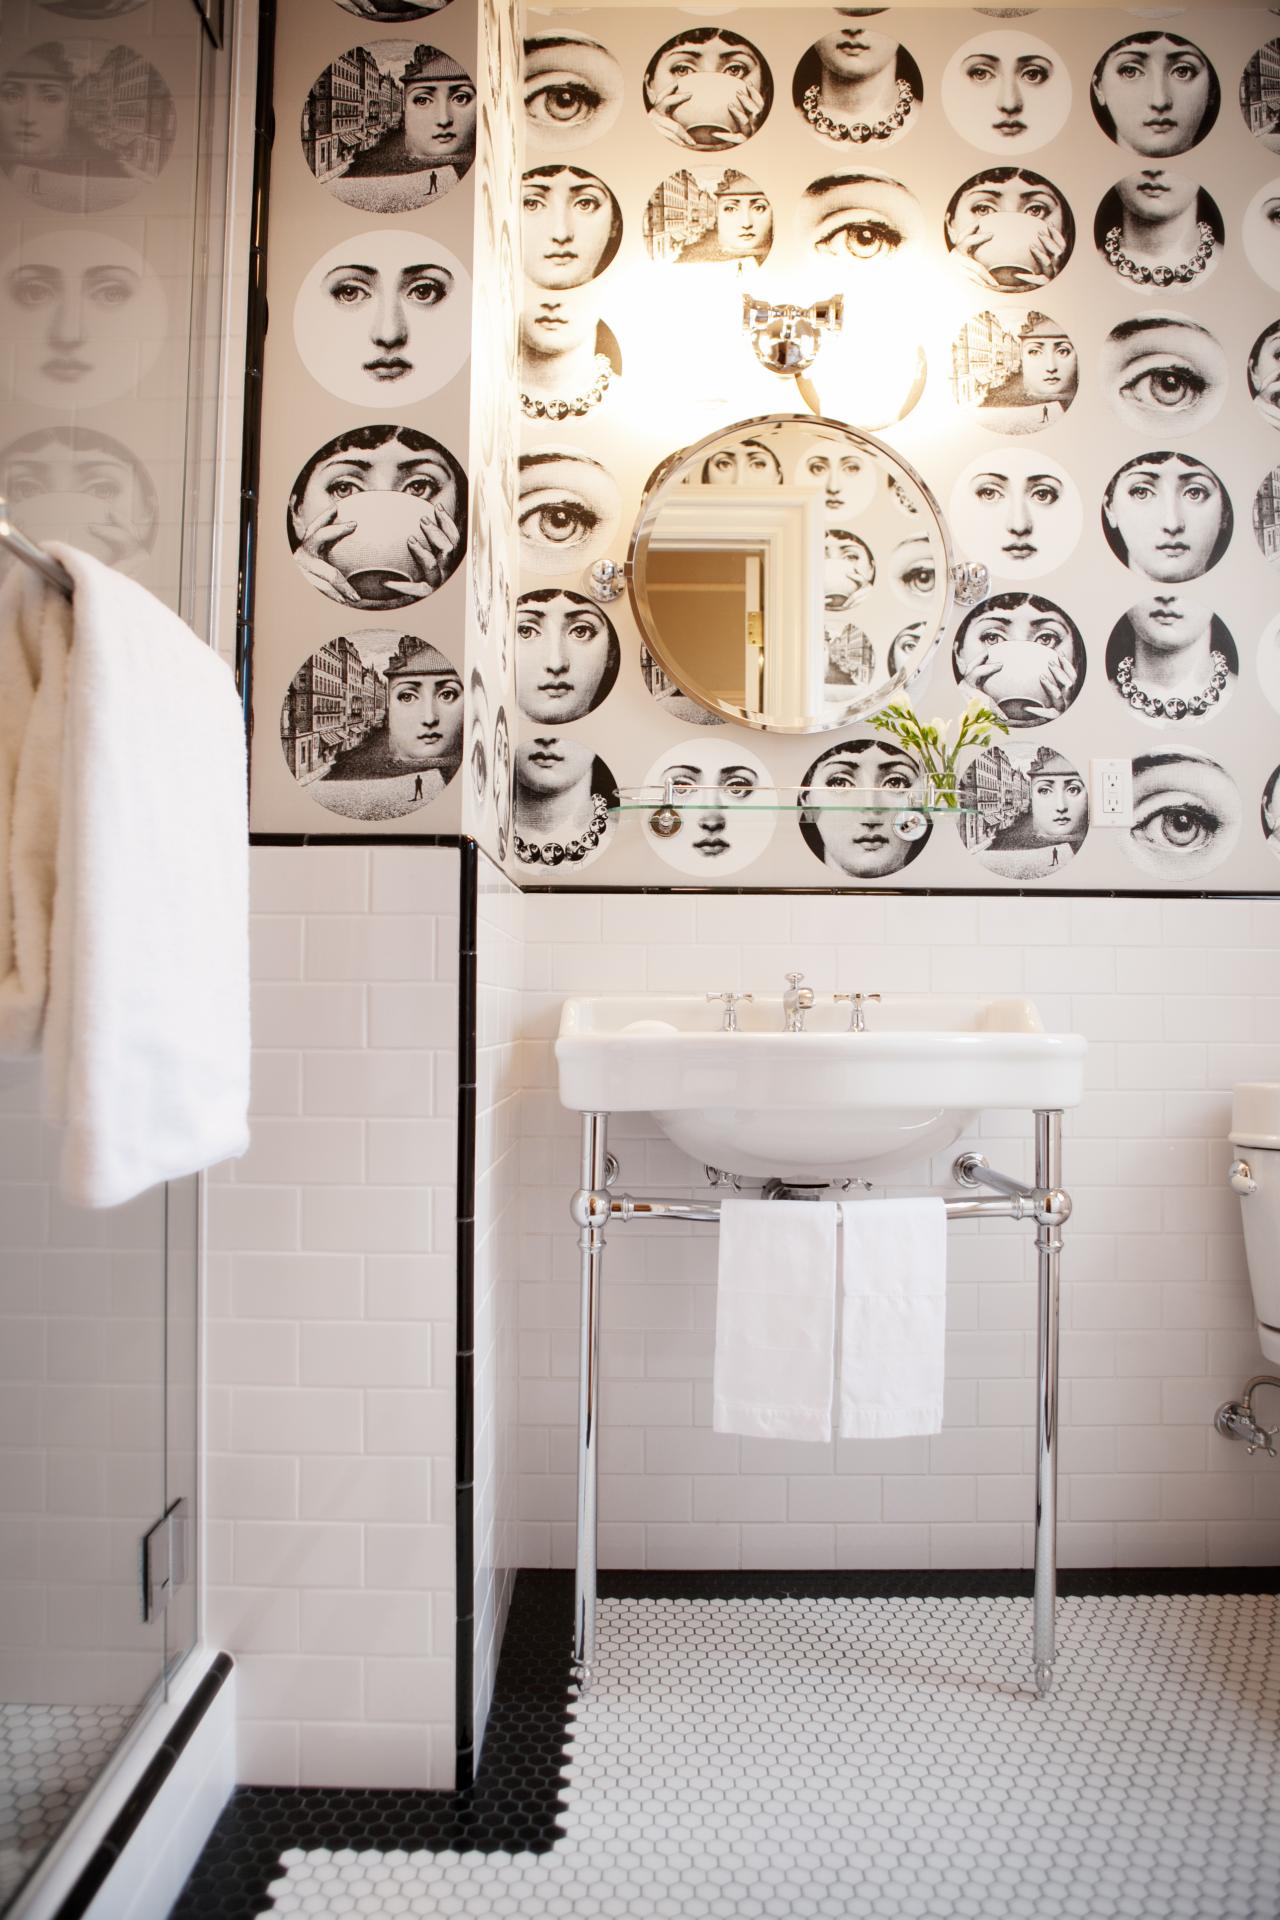 Download 15 Beautiful Reasons to Wallpaper Your Bathroom | HGTV's Decorating & Design Blog | HGTV